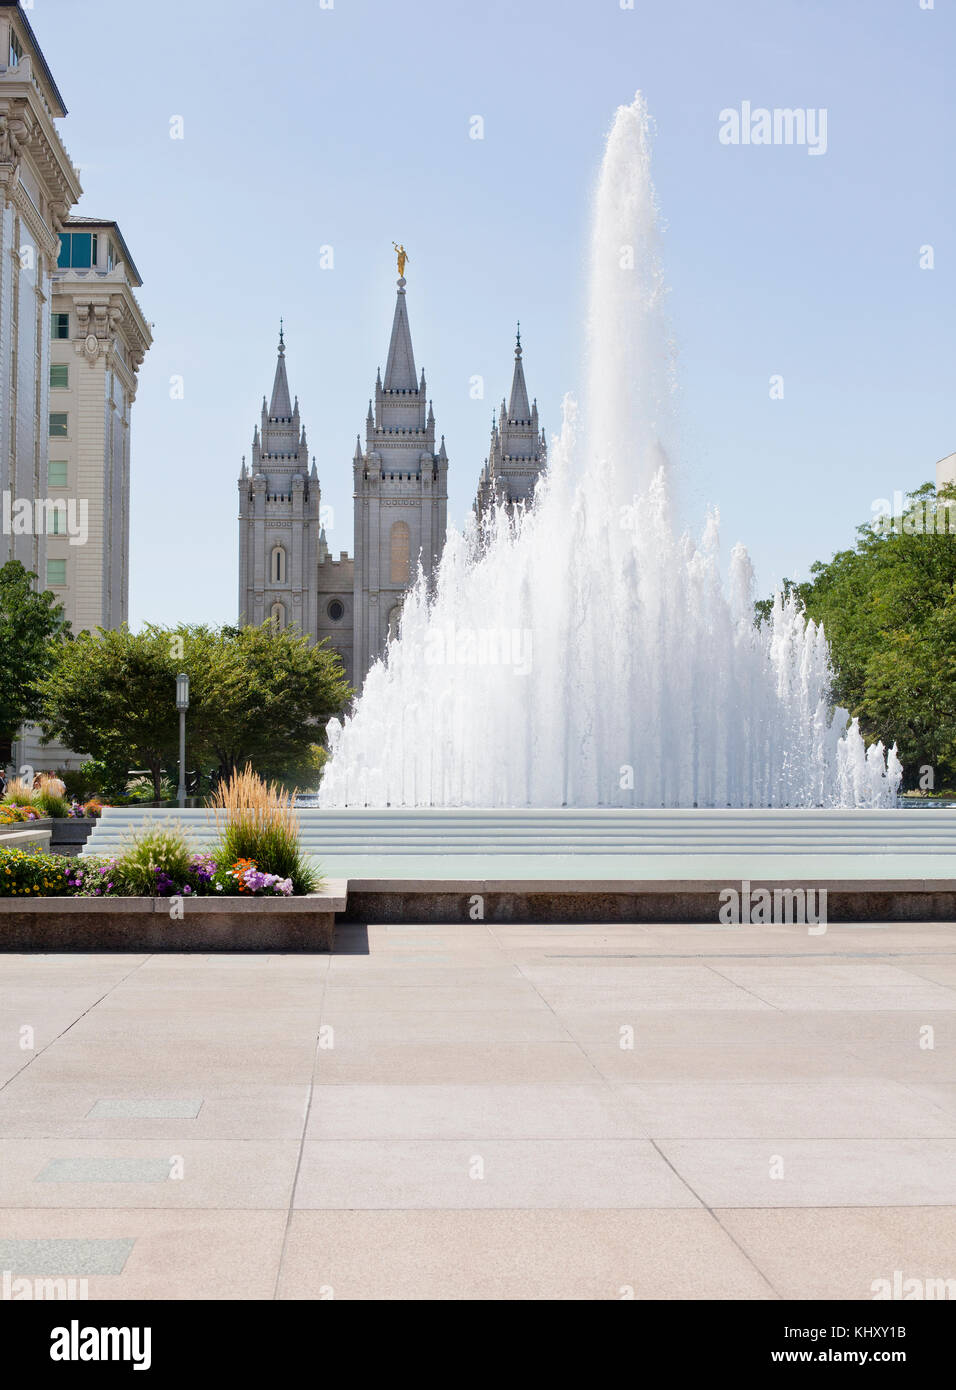 Fontana di acqua e tempio mormone guglie, Salt Lake City, Utah, Stati Uniti d'America Foto Stock